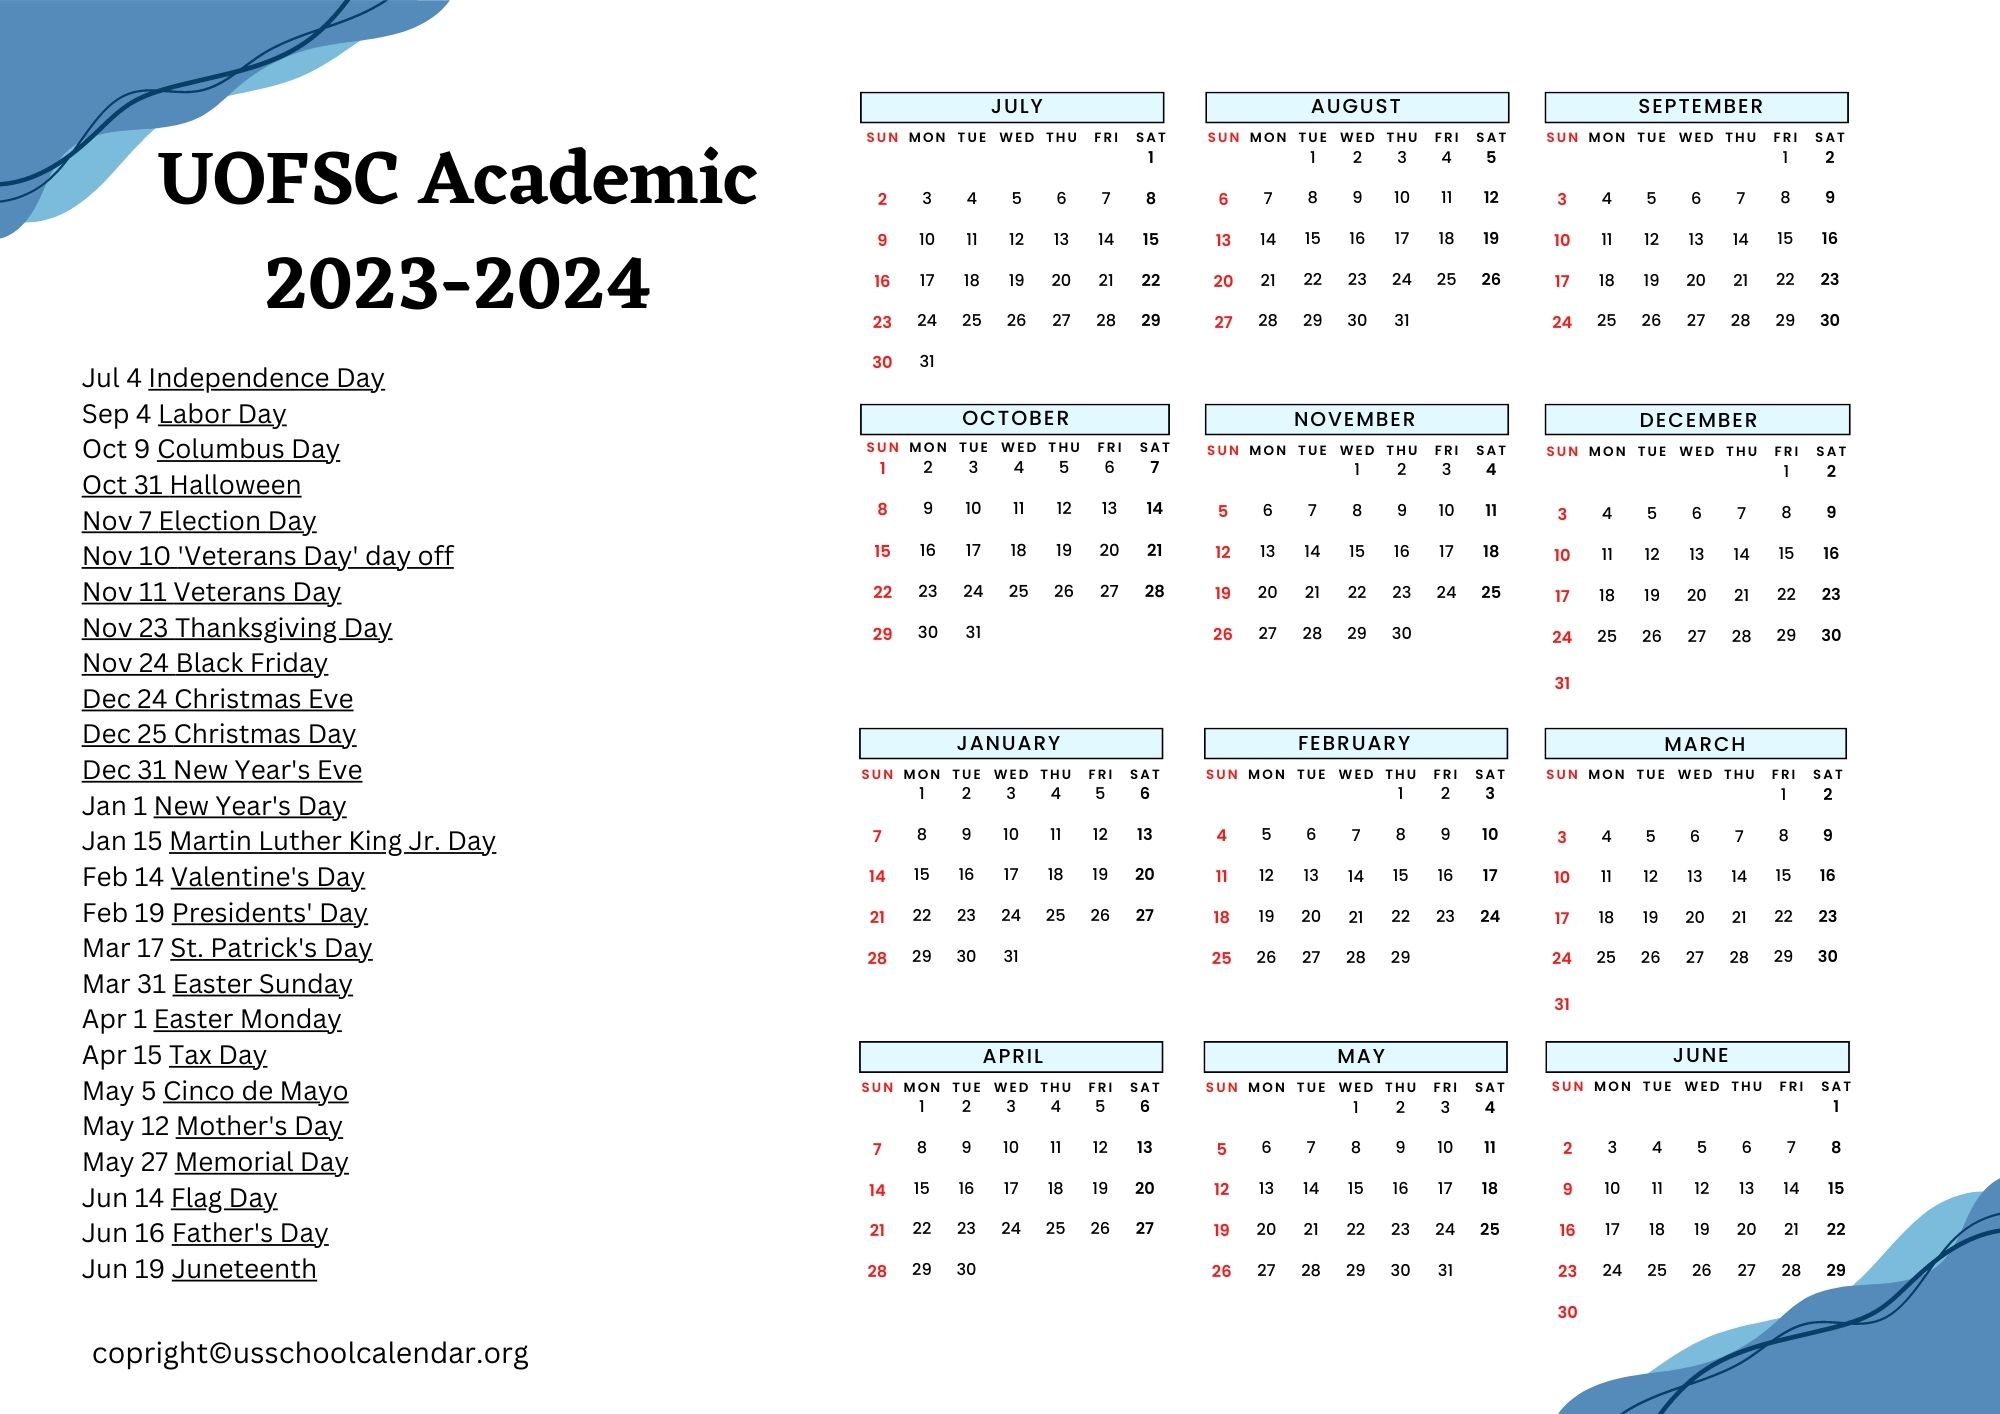 UOFSC Academic Calendar with Holidays 20232024